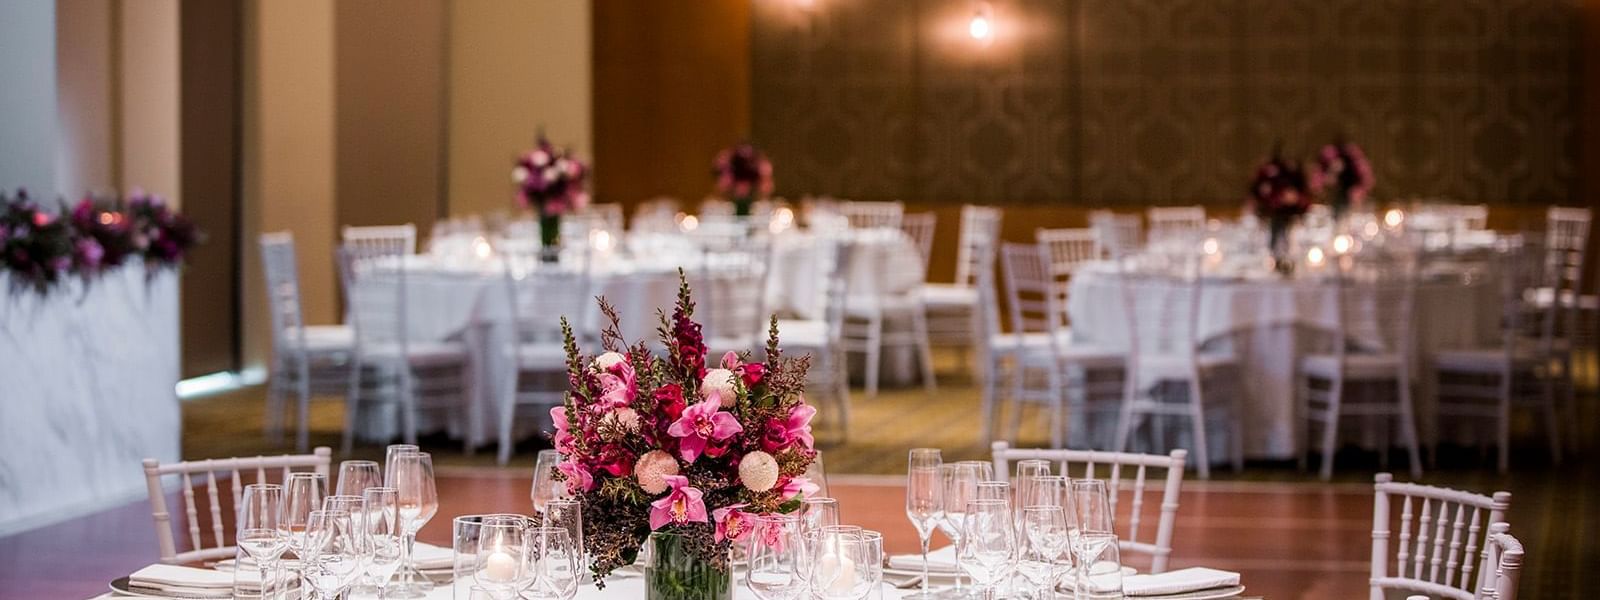 Banquet setup in Garden Room at Crown Hotel Melbourne